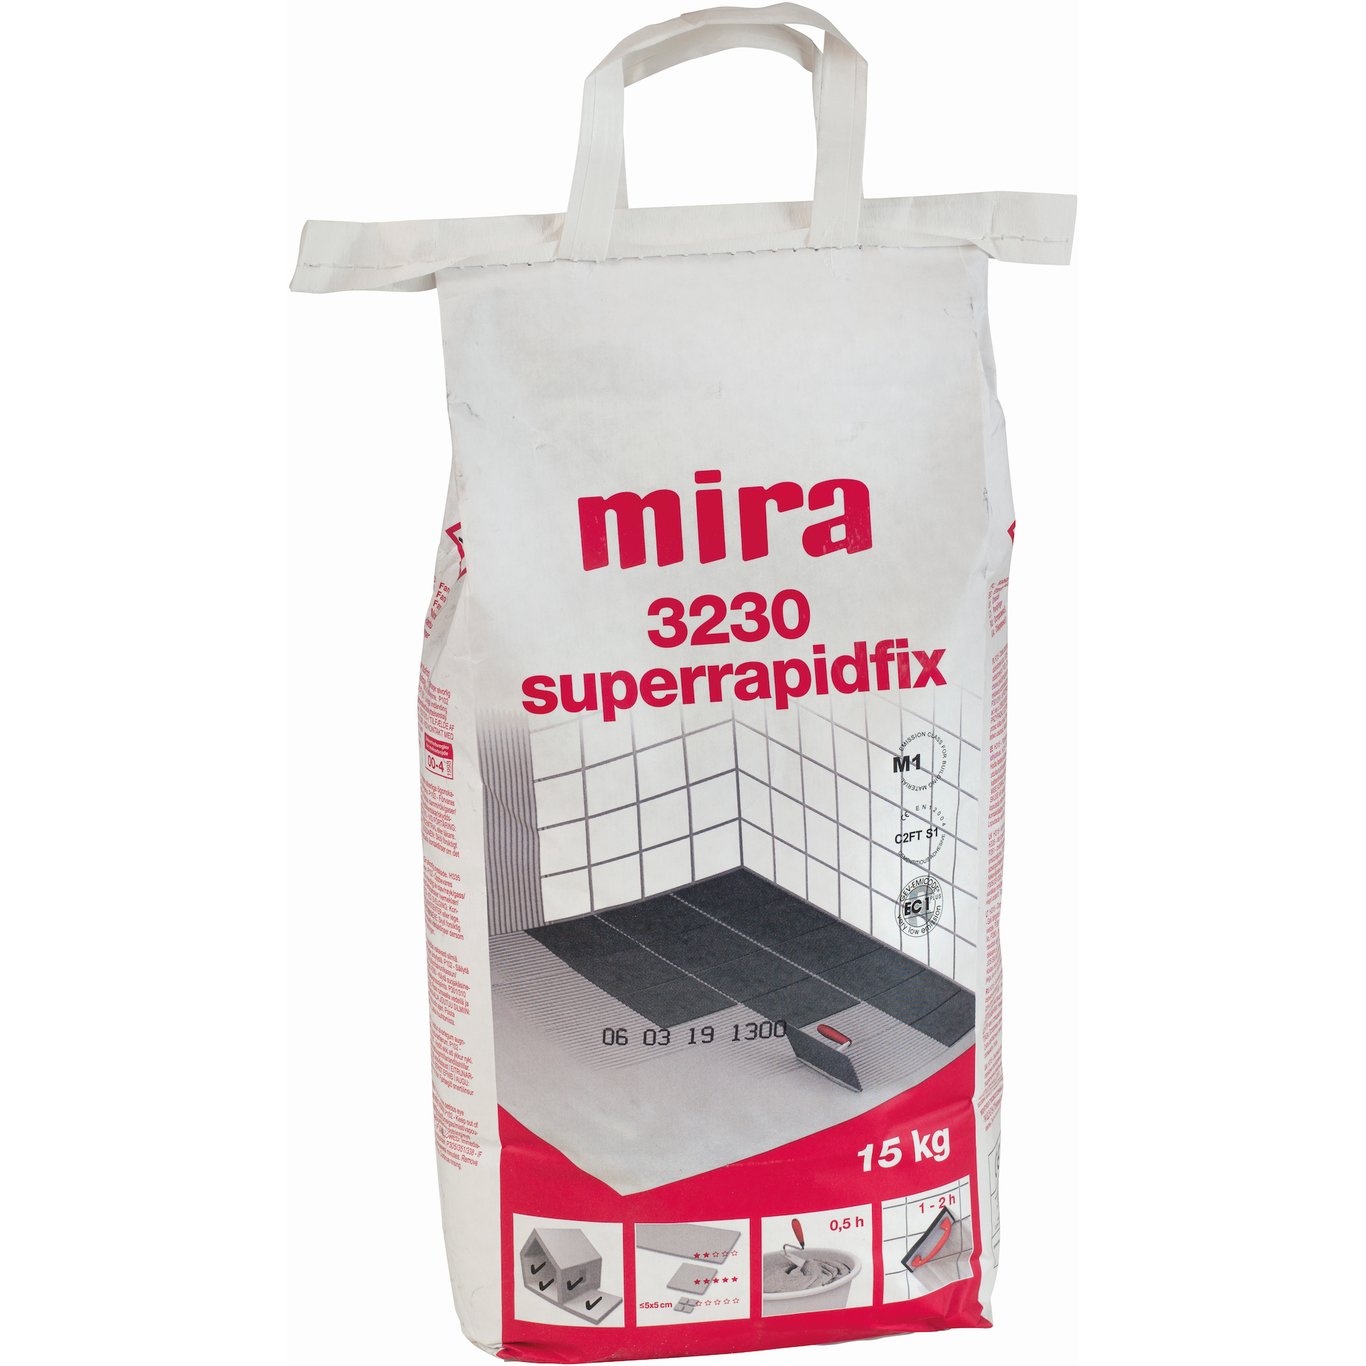 MIRA 3230 SUPERRAPIDFIX 15KG